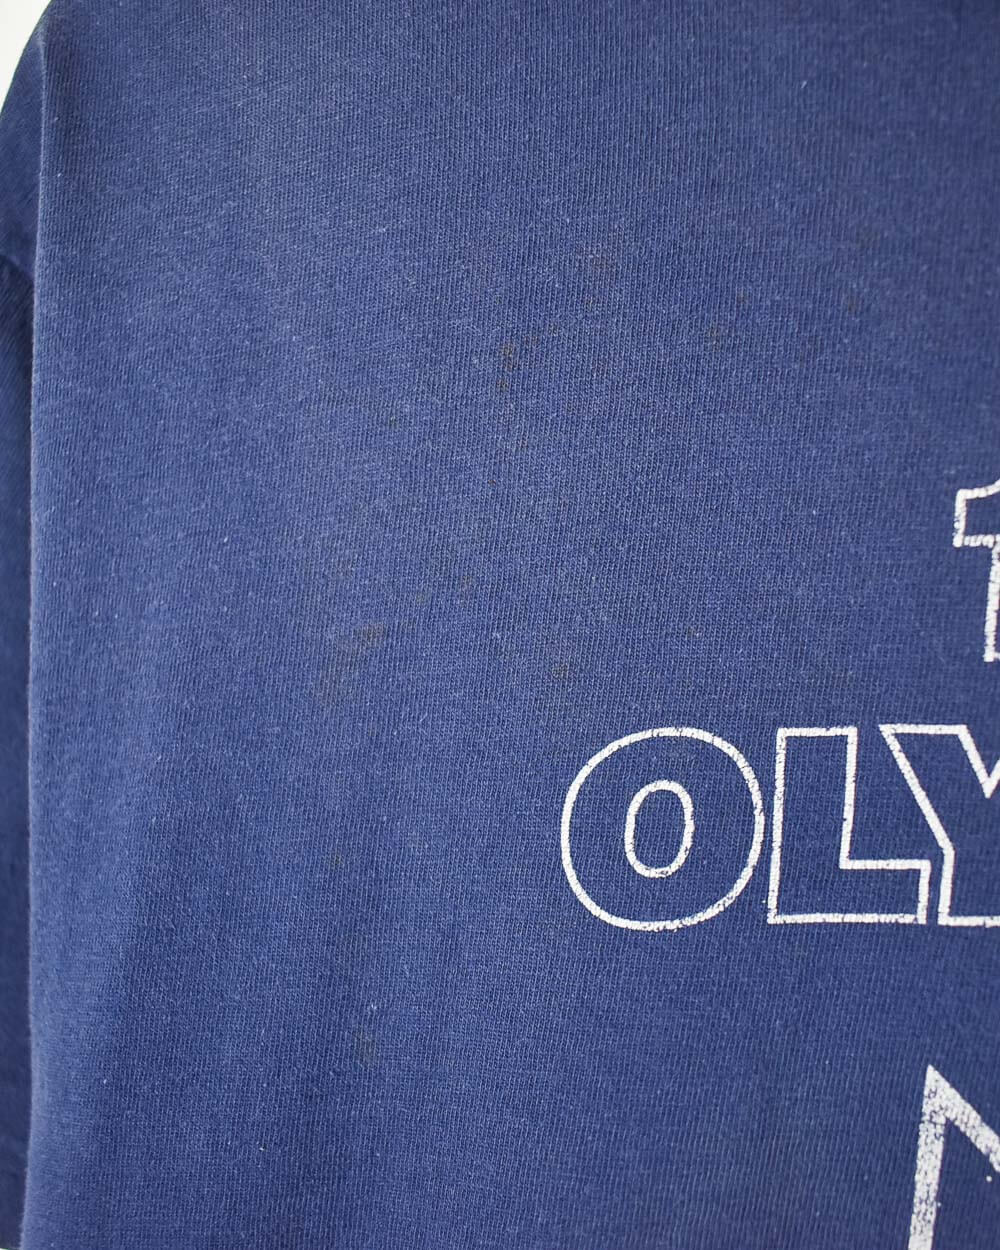 Navy Hanes 1980 Olympics T-Shirt - Large